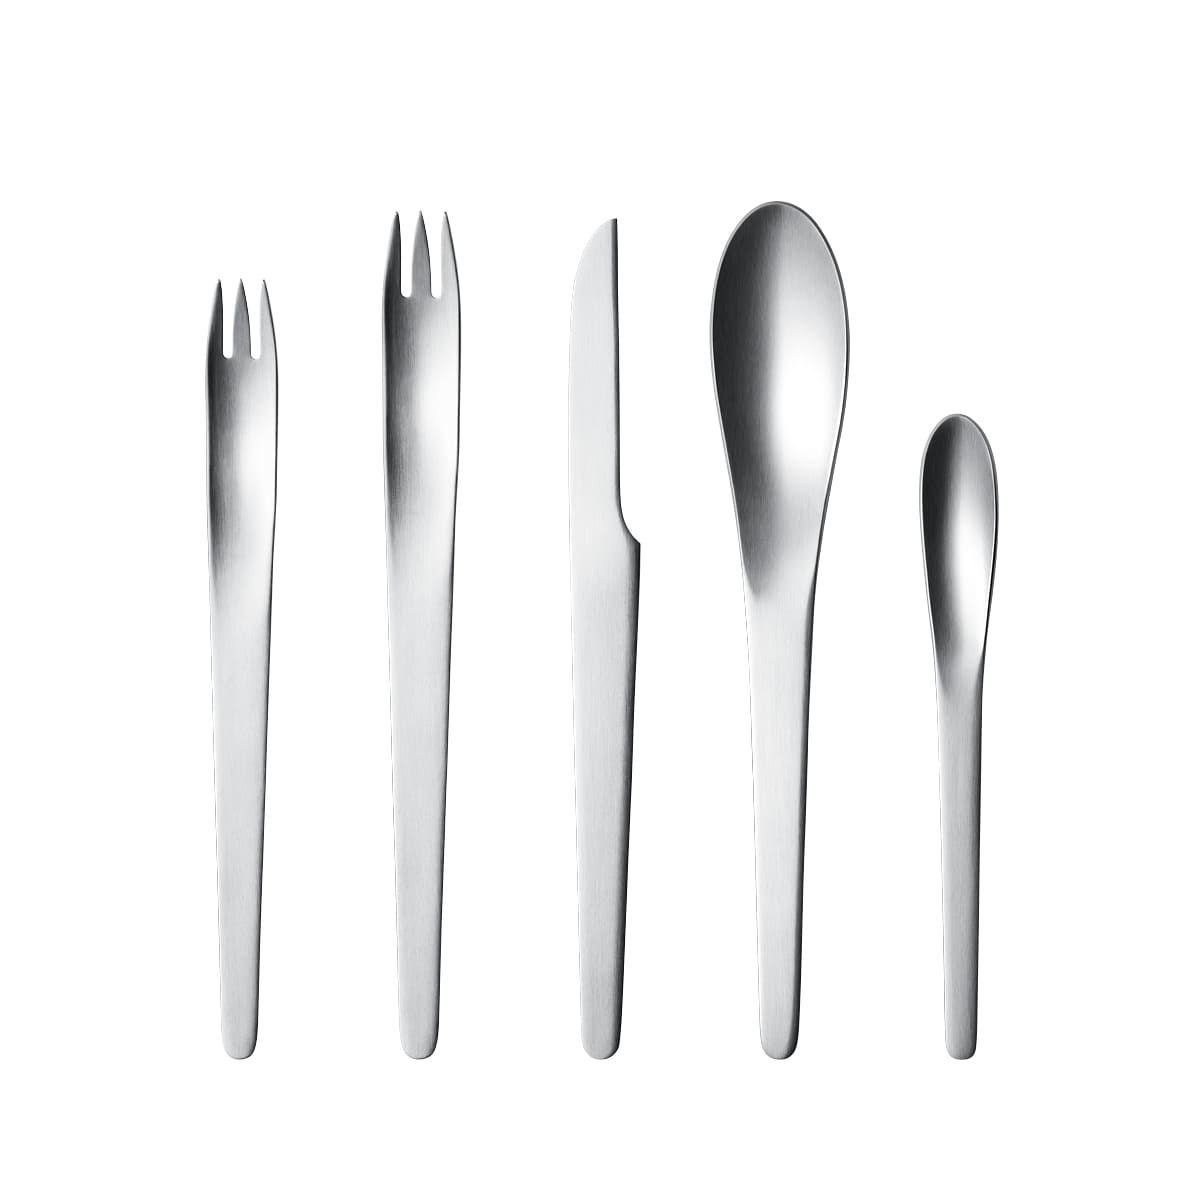 Georg Jensen Arne Jacobsen 5 pc Matte Stainless Steel Cutlery